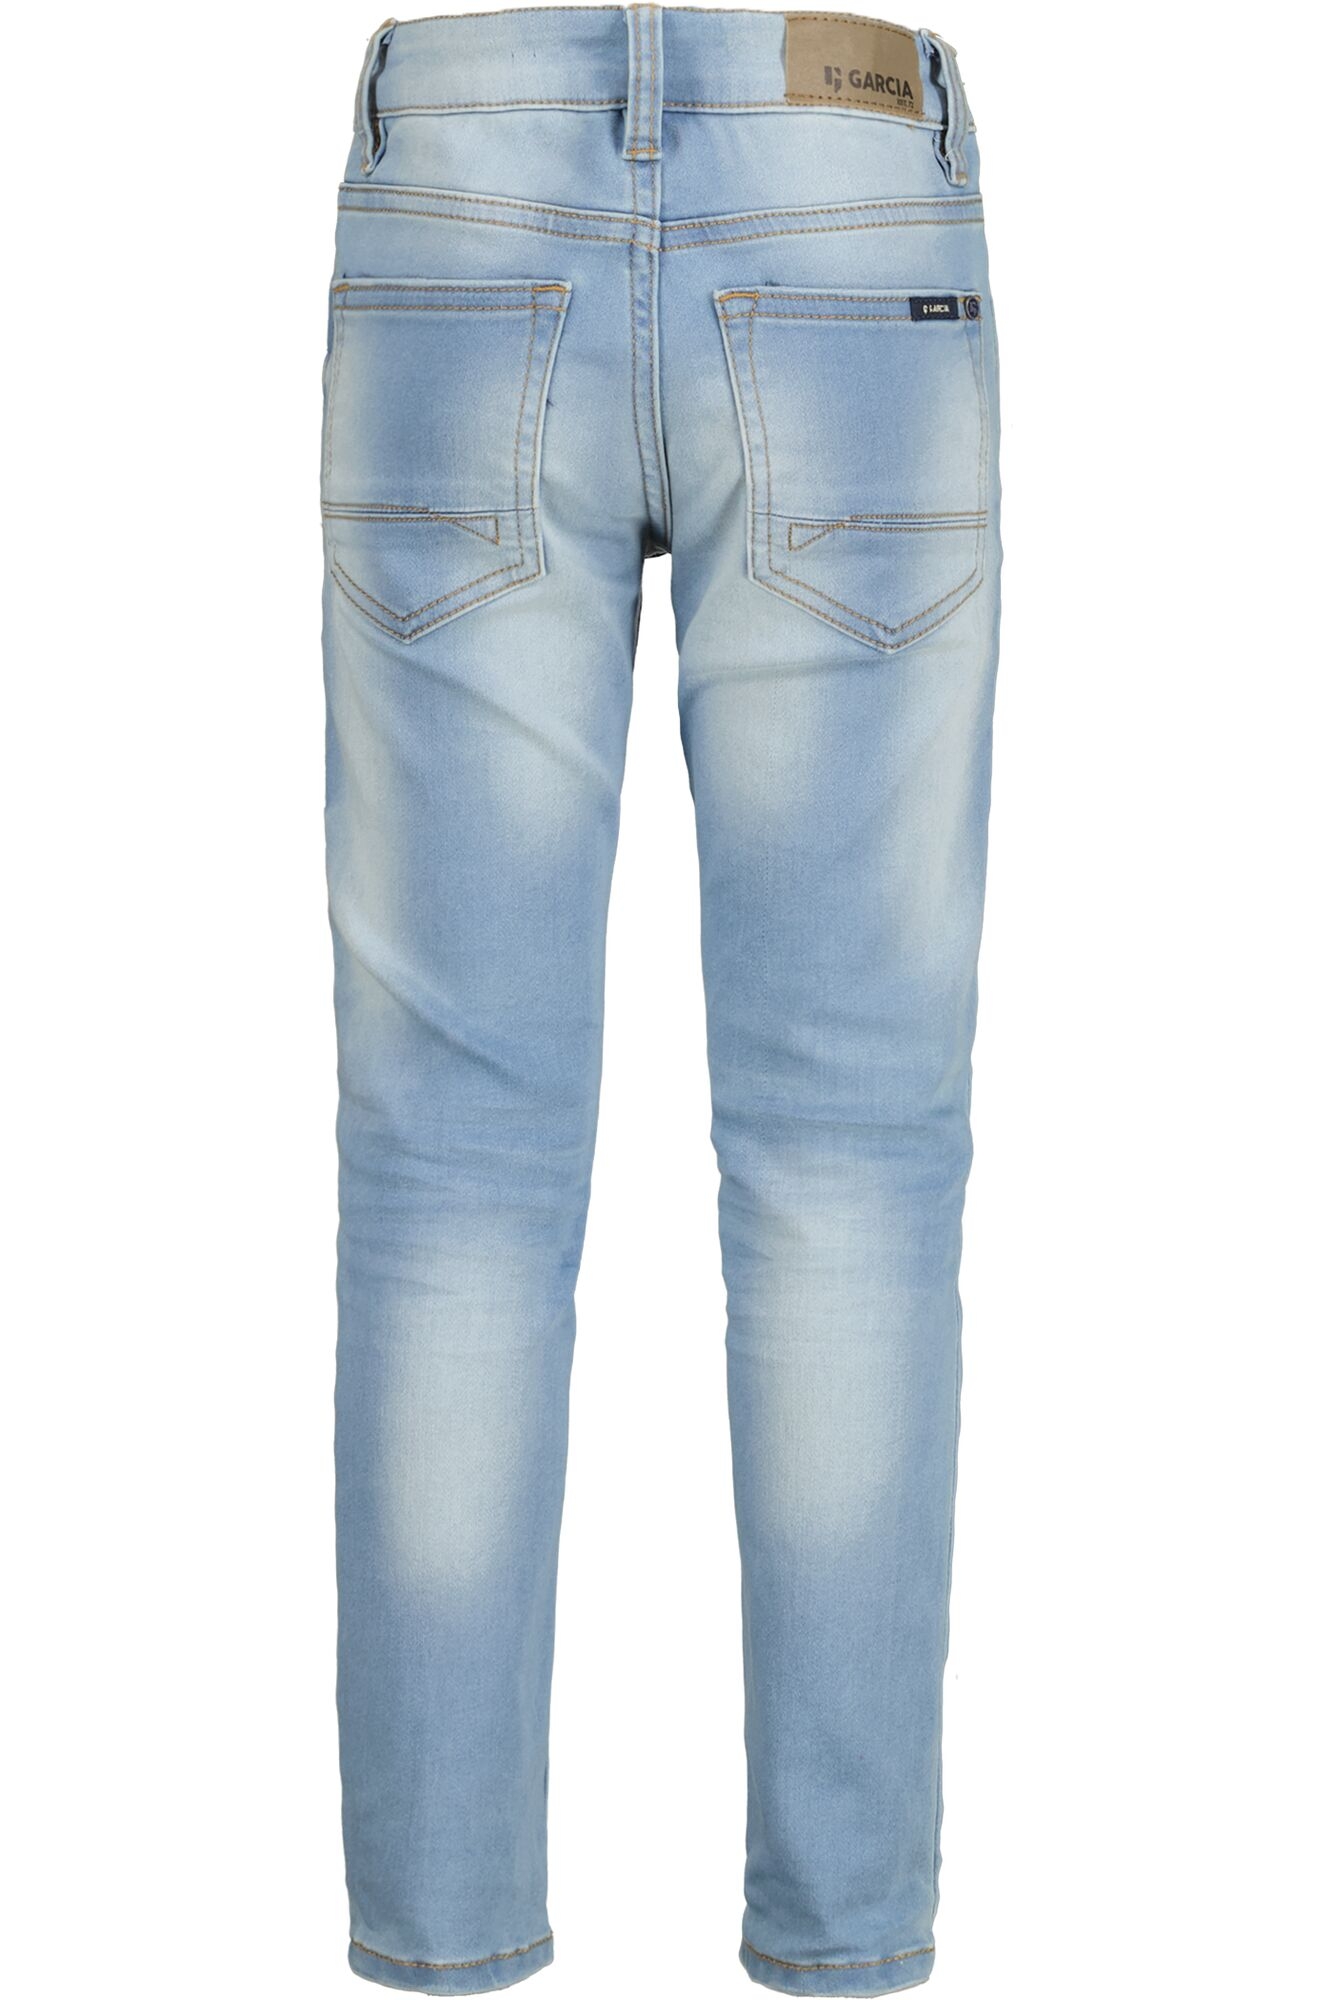 GARCIA Jeans 370 Xevi 10711373